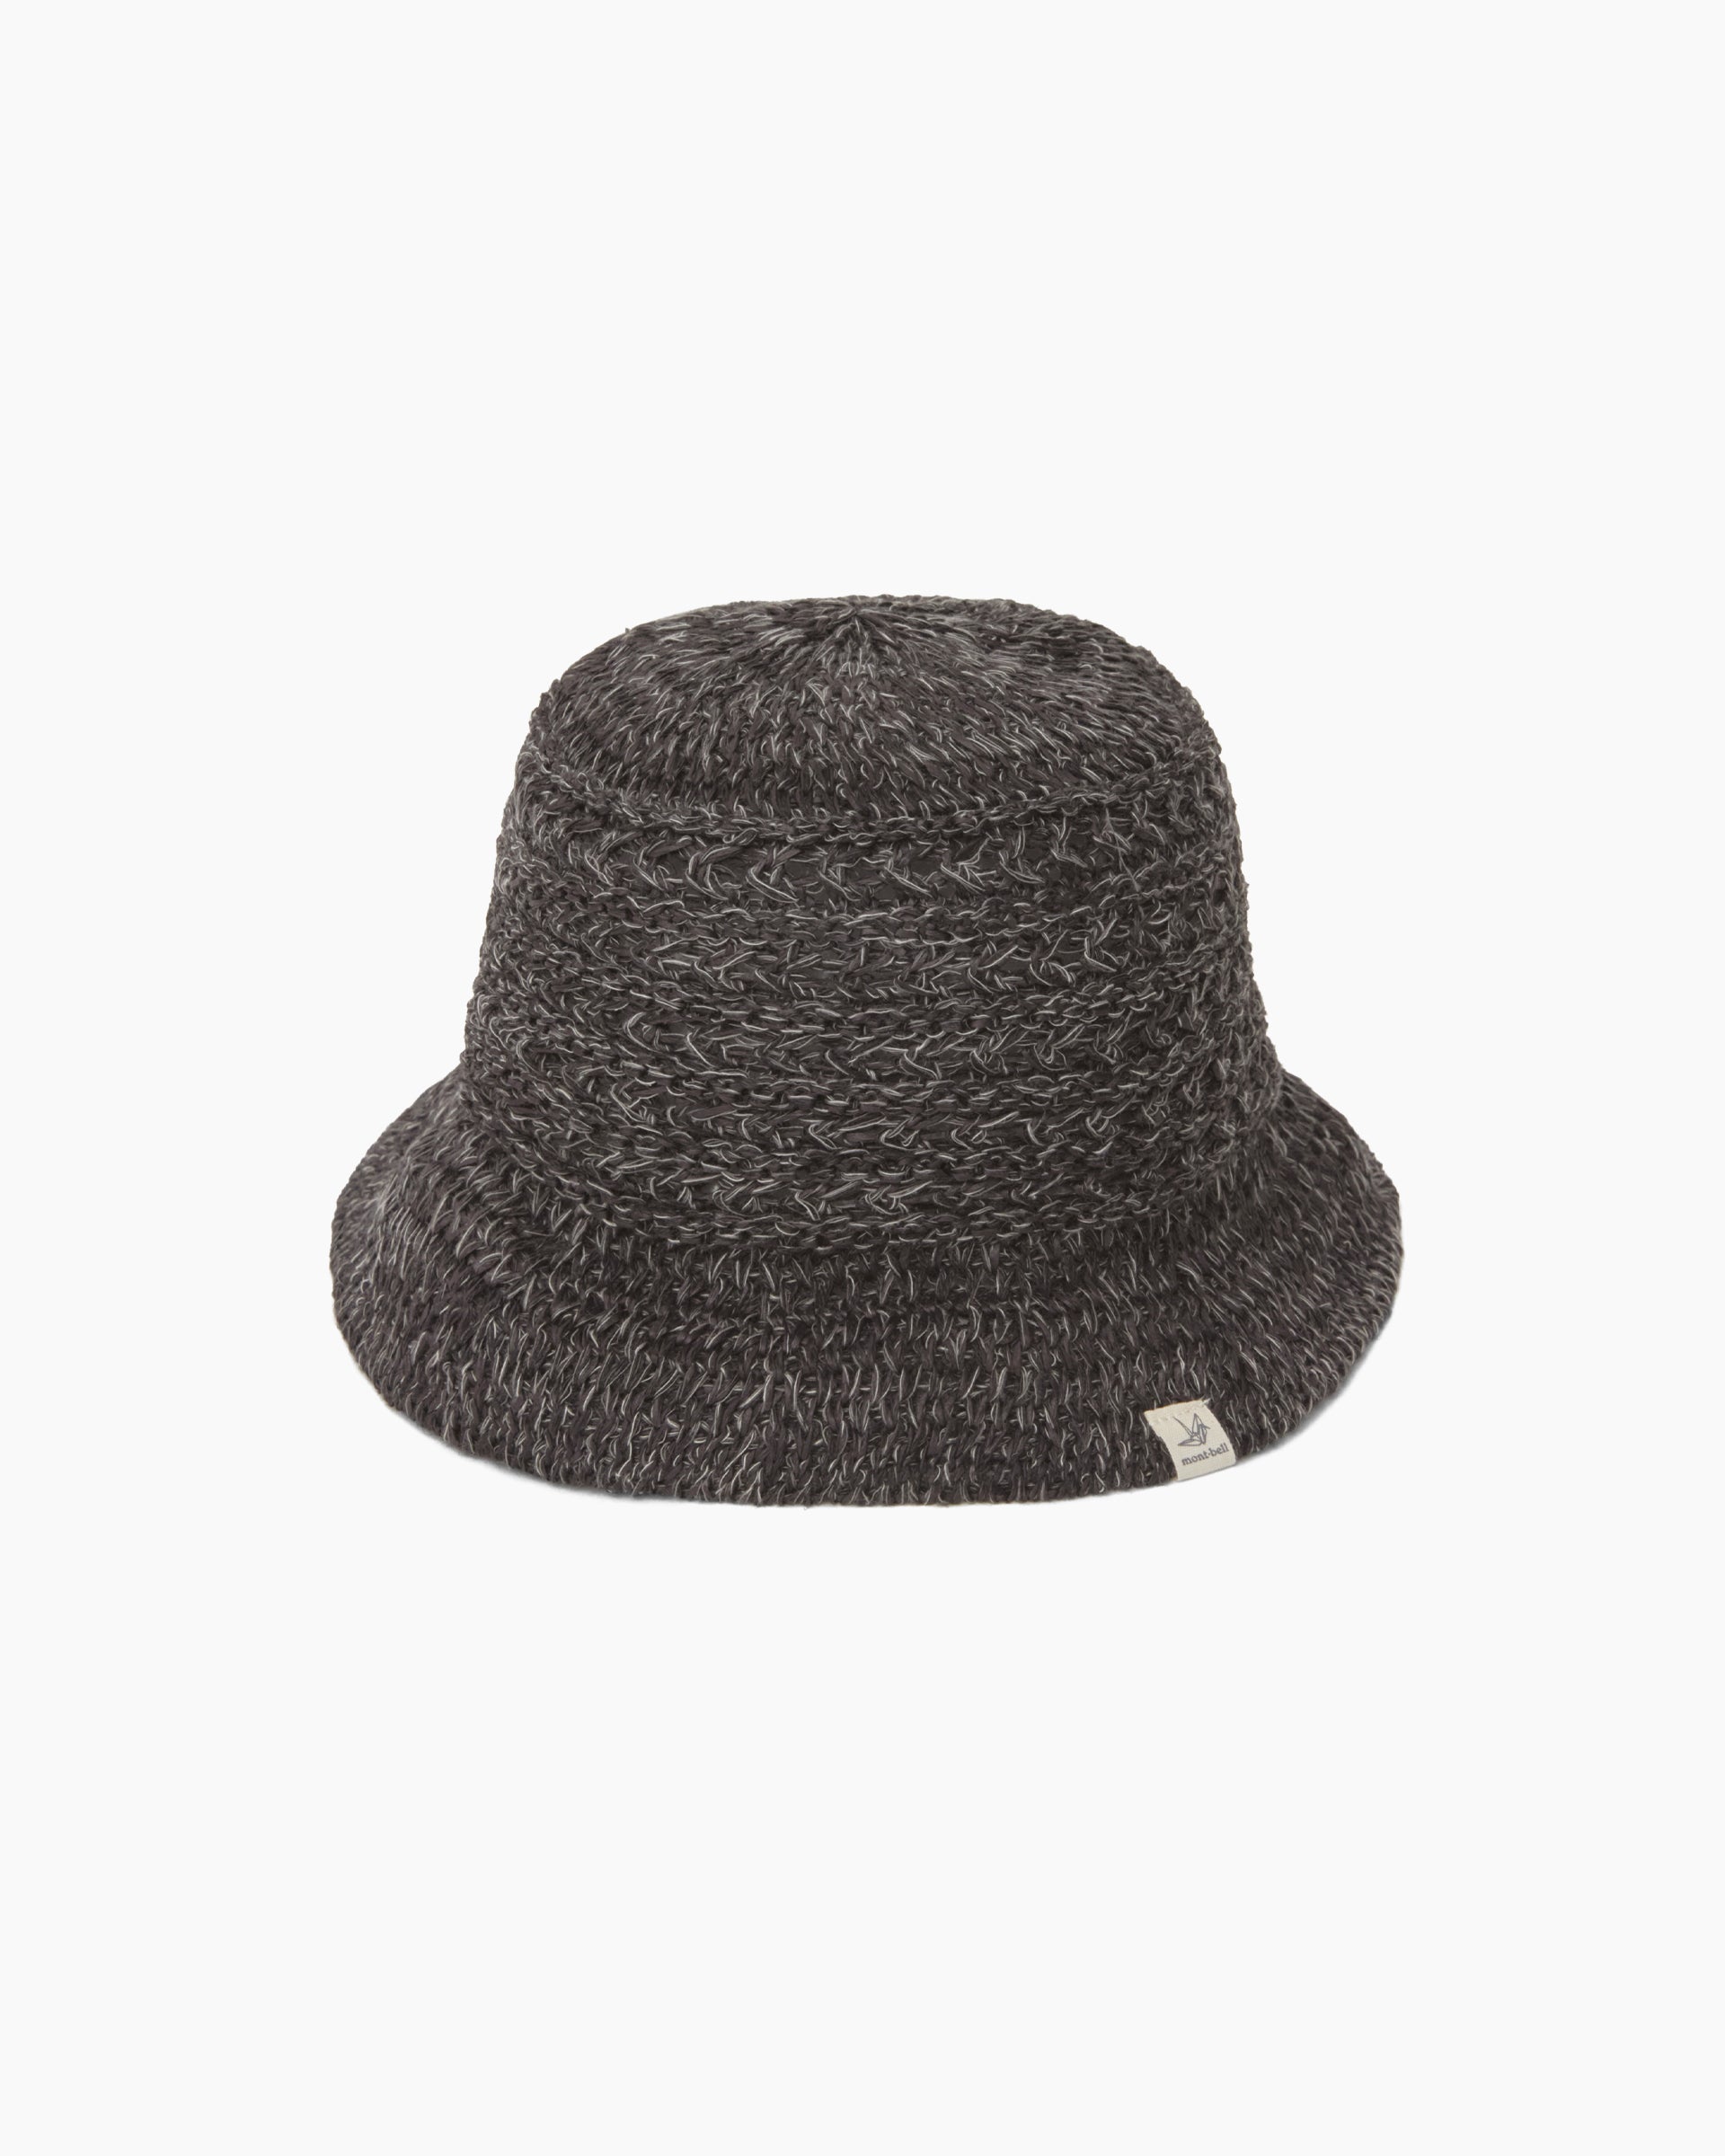 KAMICO Short Brim Hat Charcoal